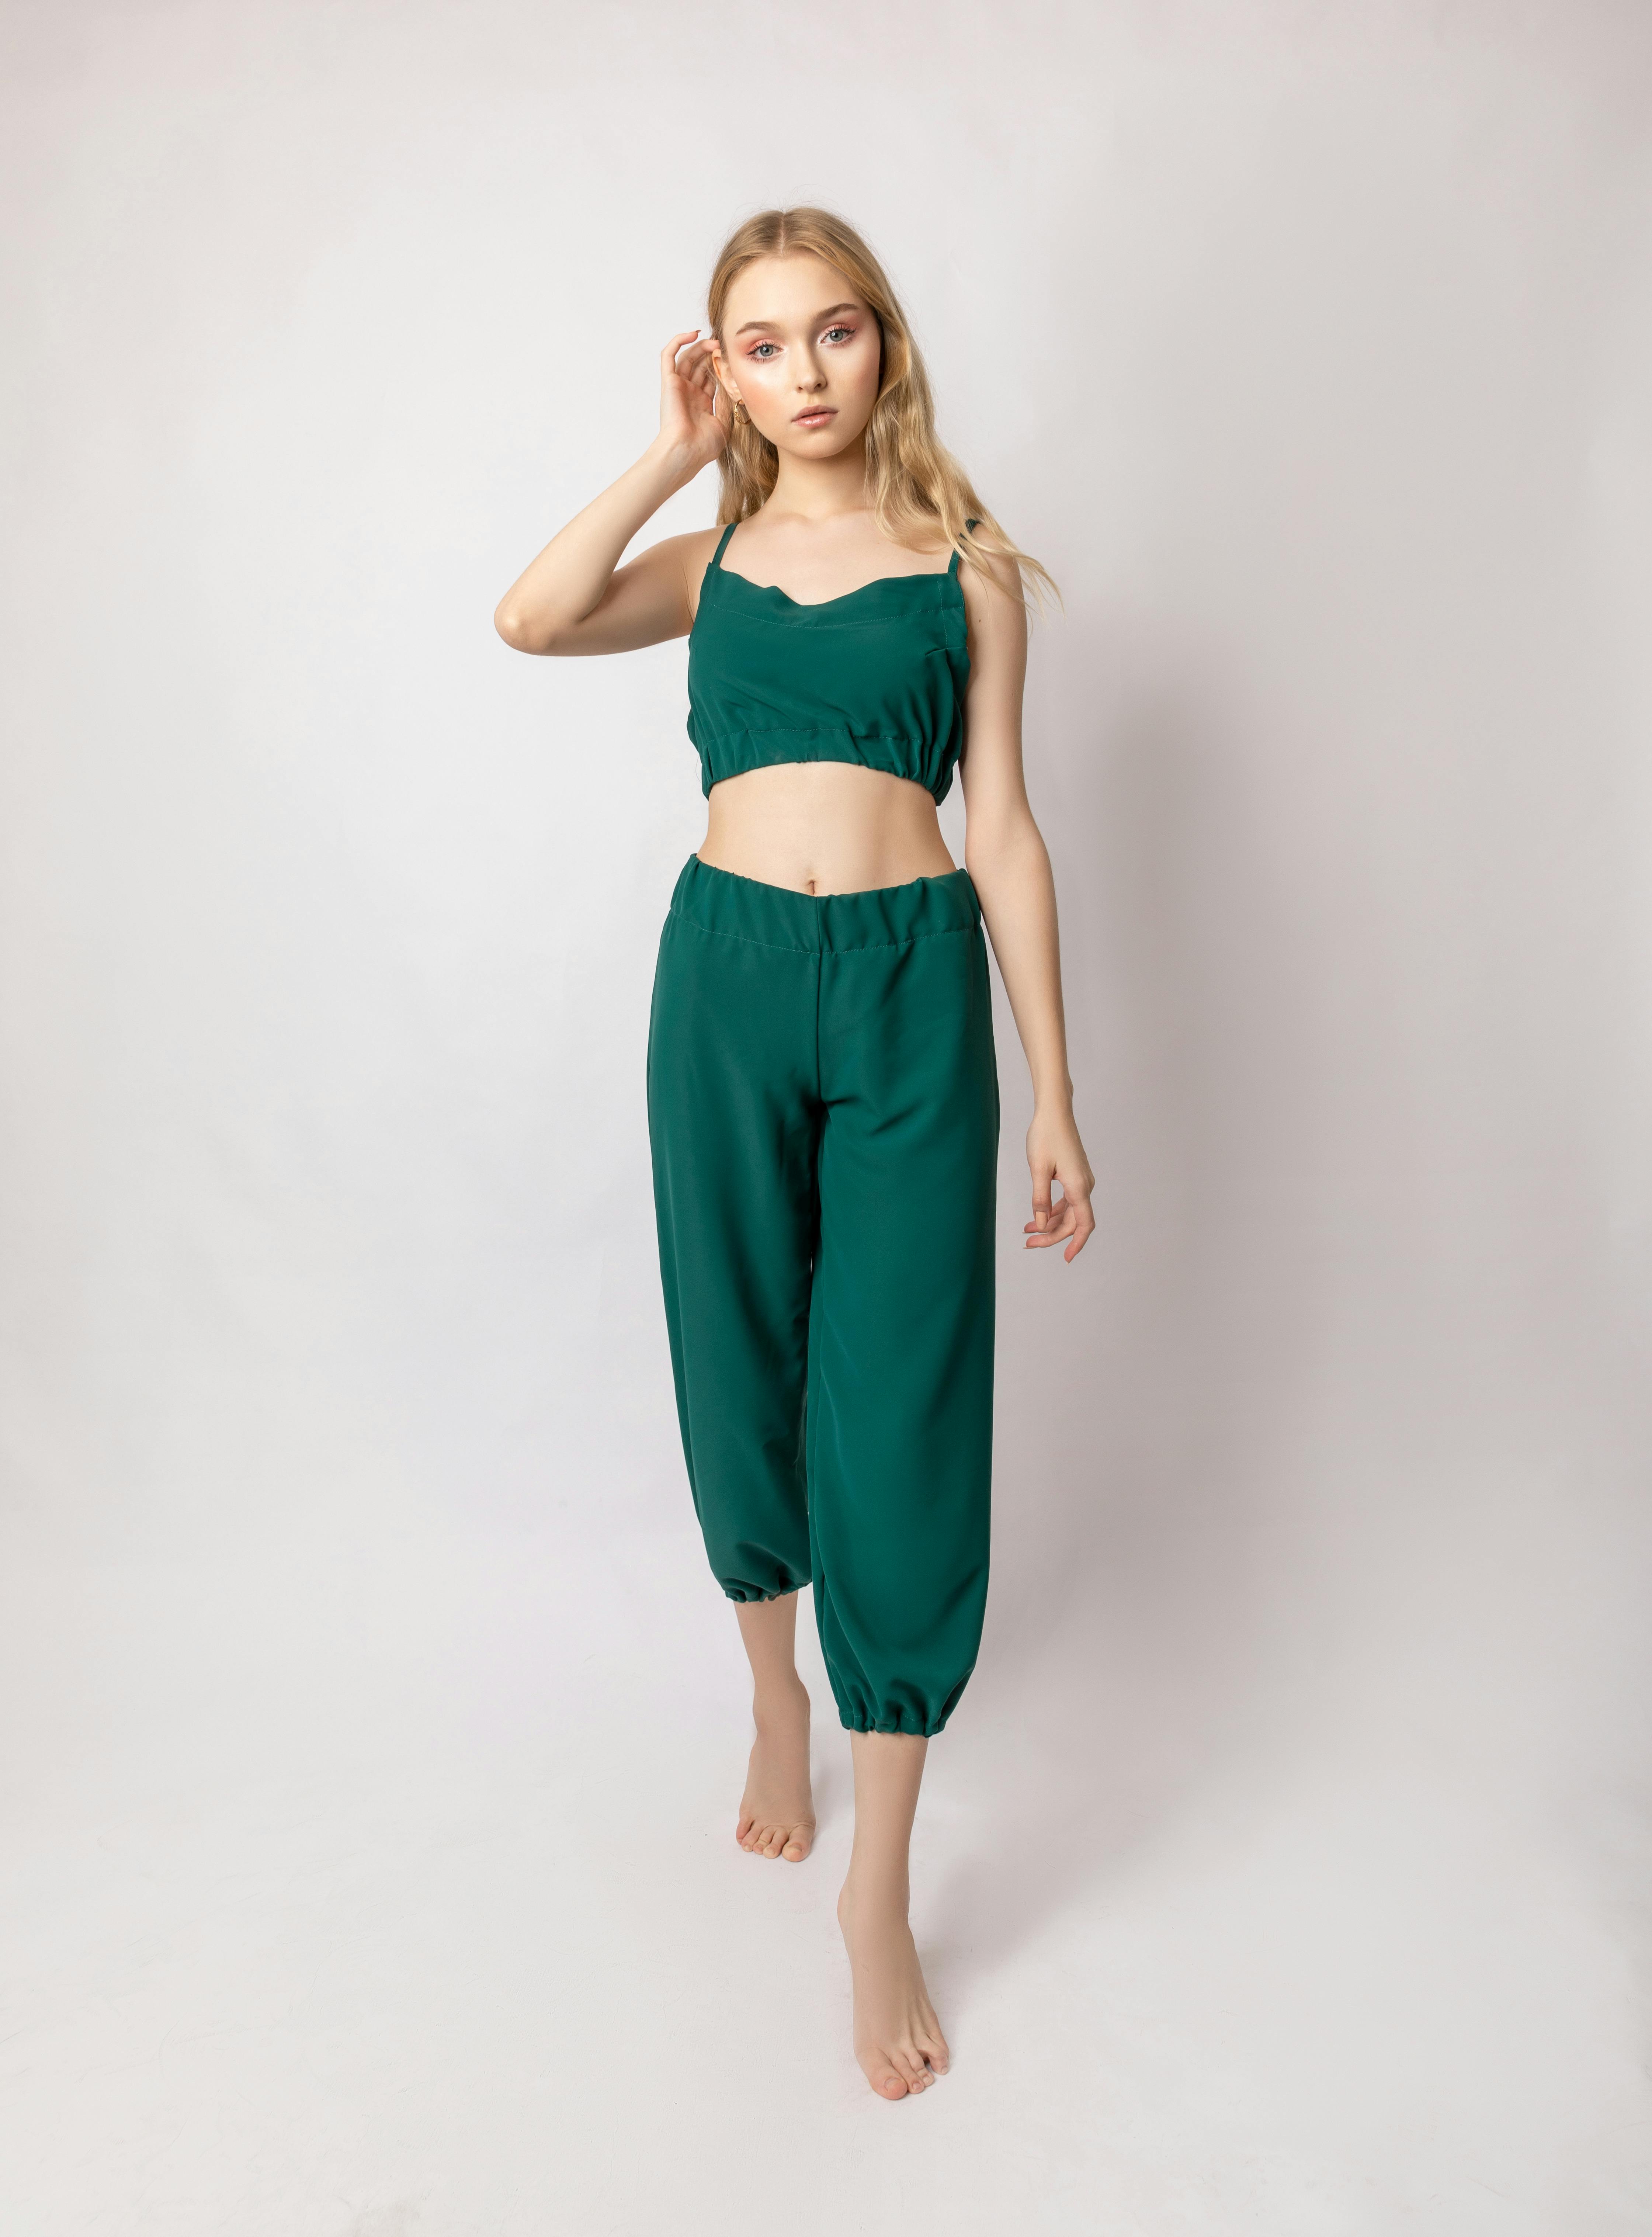 Studio Shoot of a Girl Posing in Pastel Green Underwear · Free Stock Photo